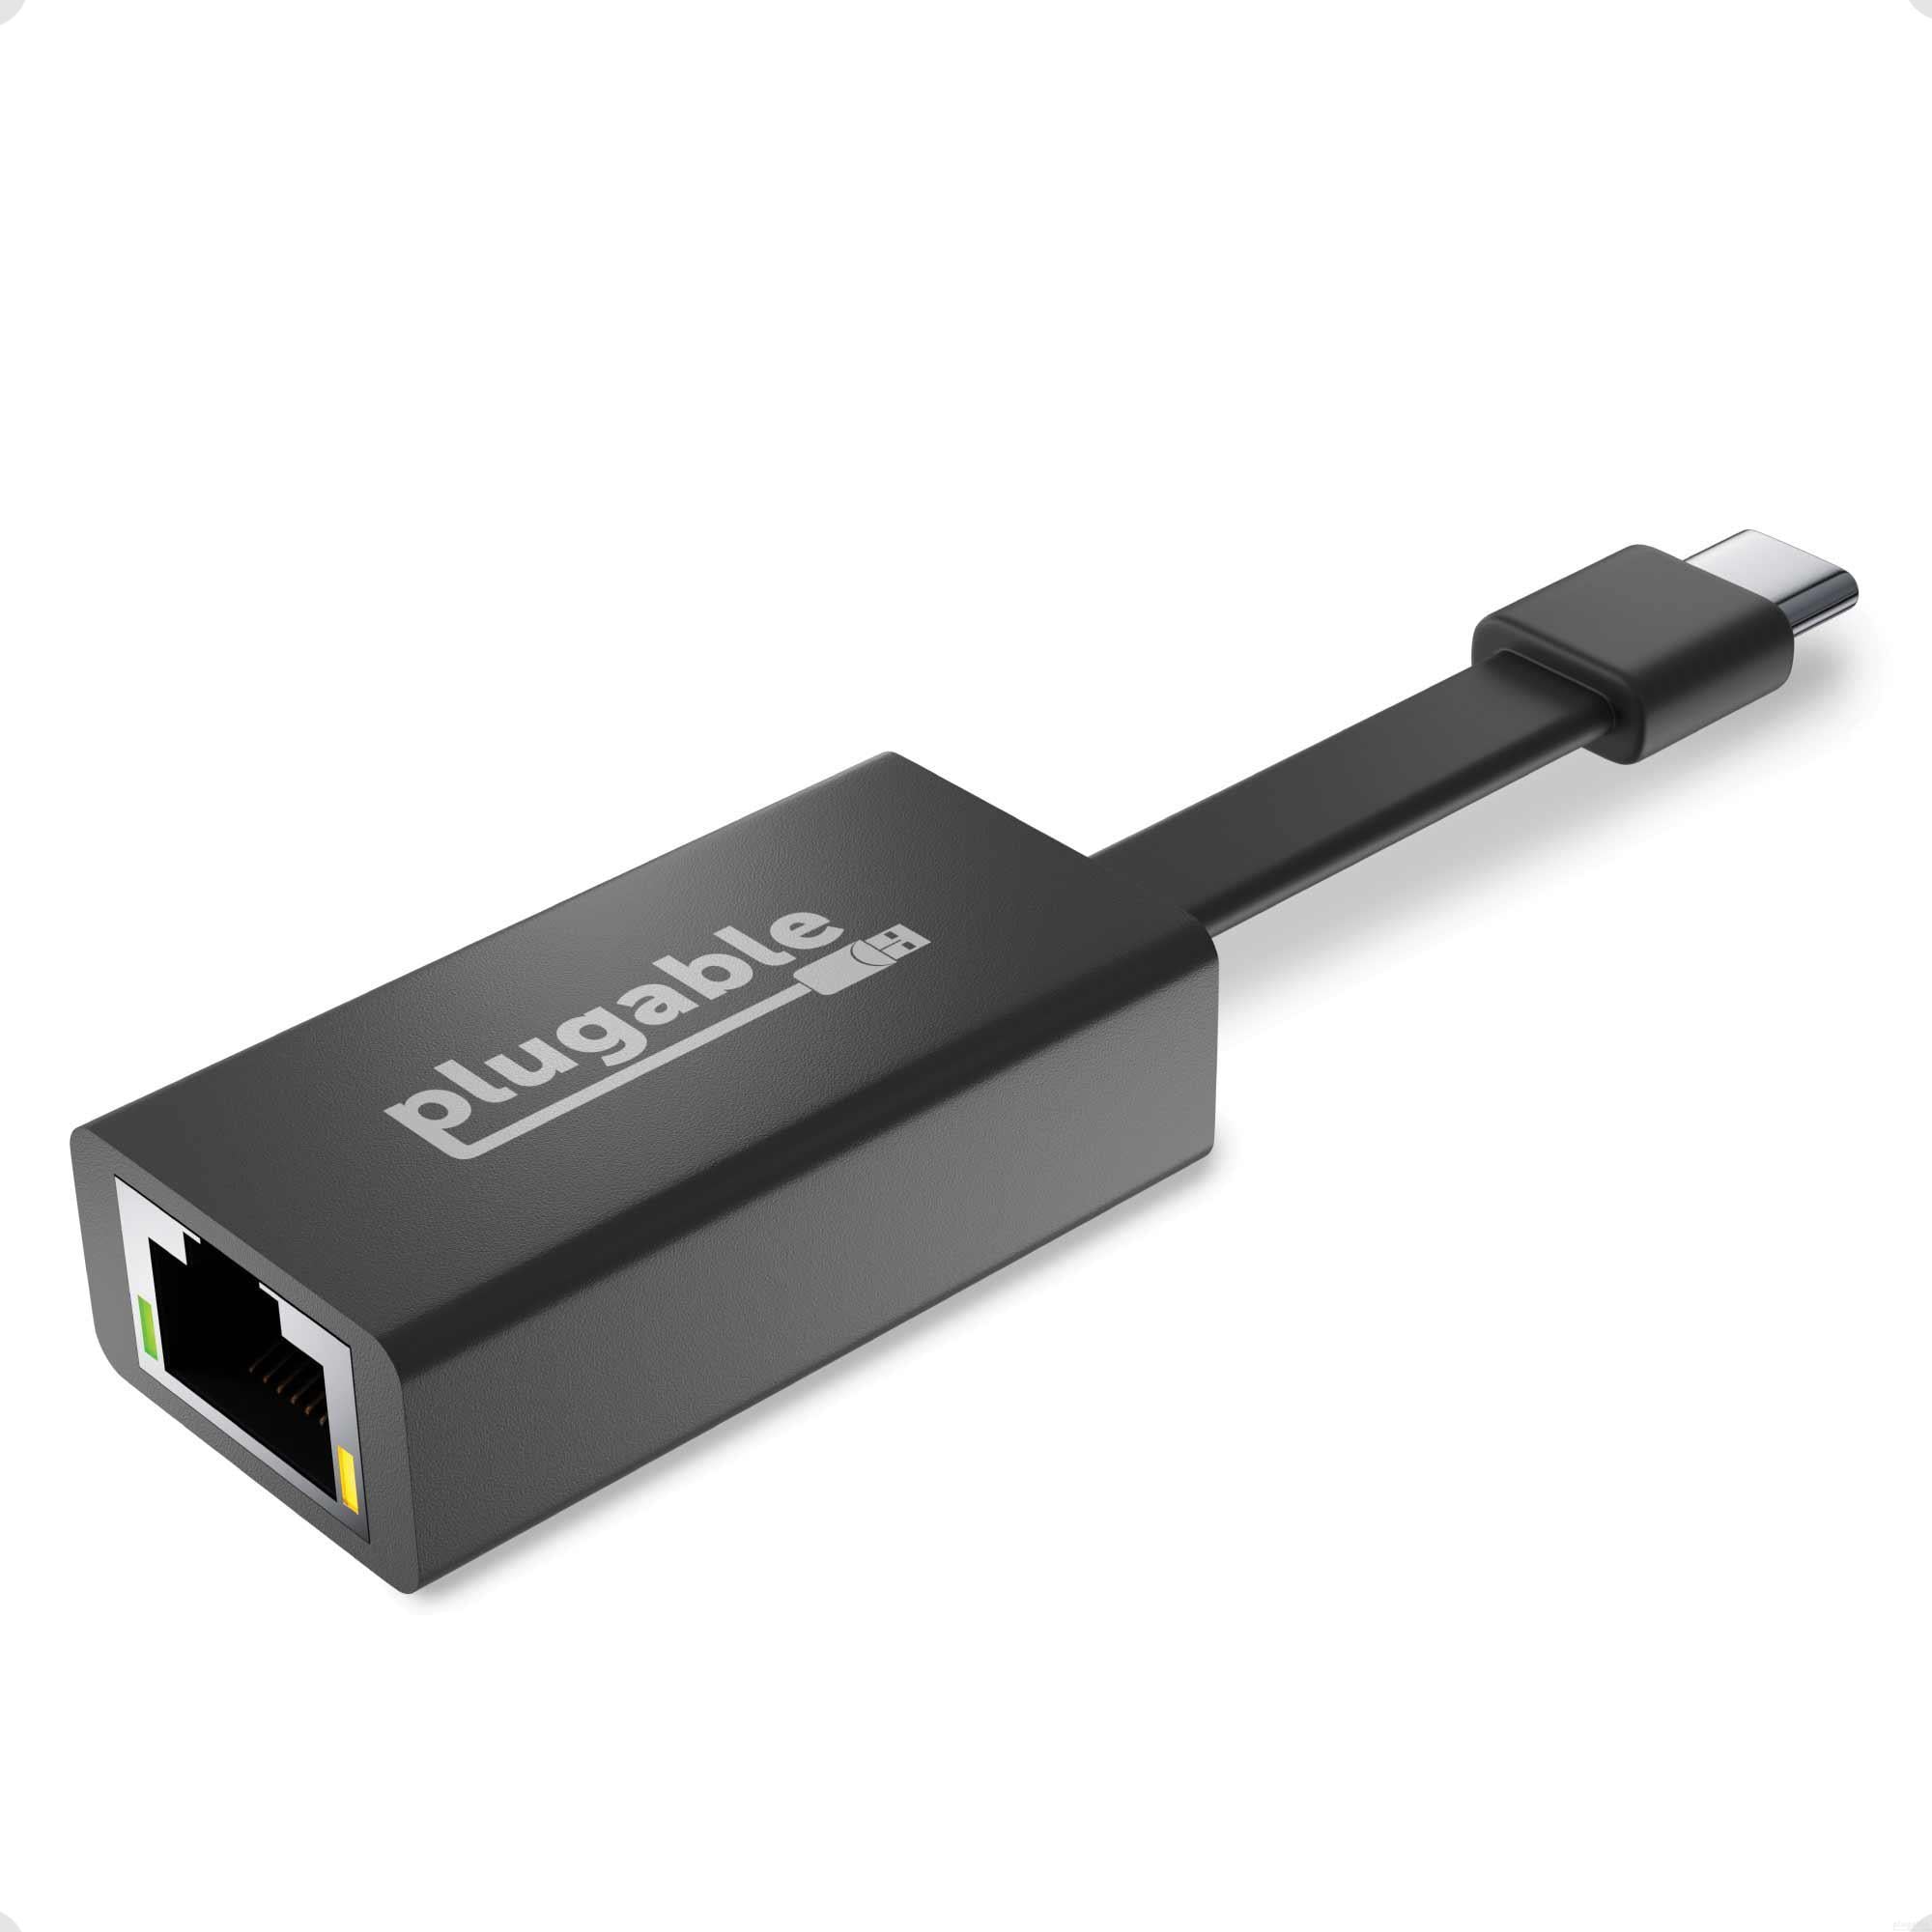 Plugable USB-C to Gigabit Ethernet Adapter